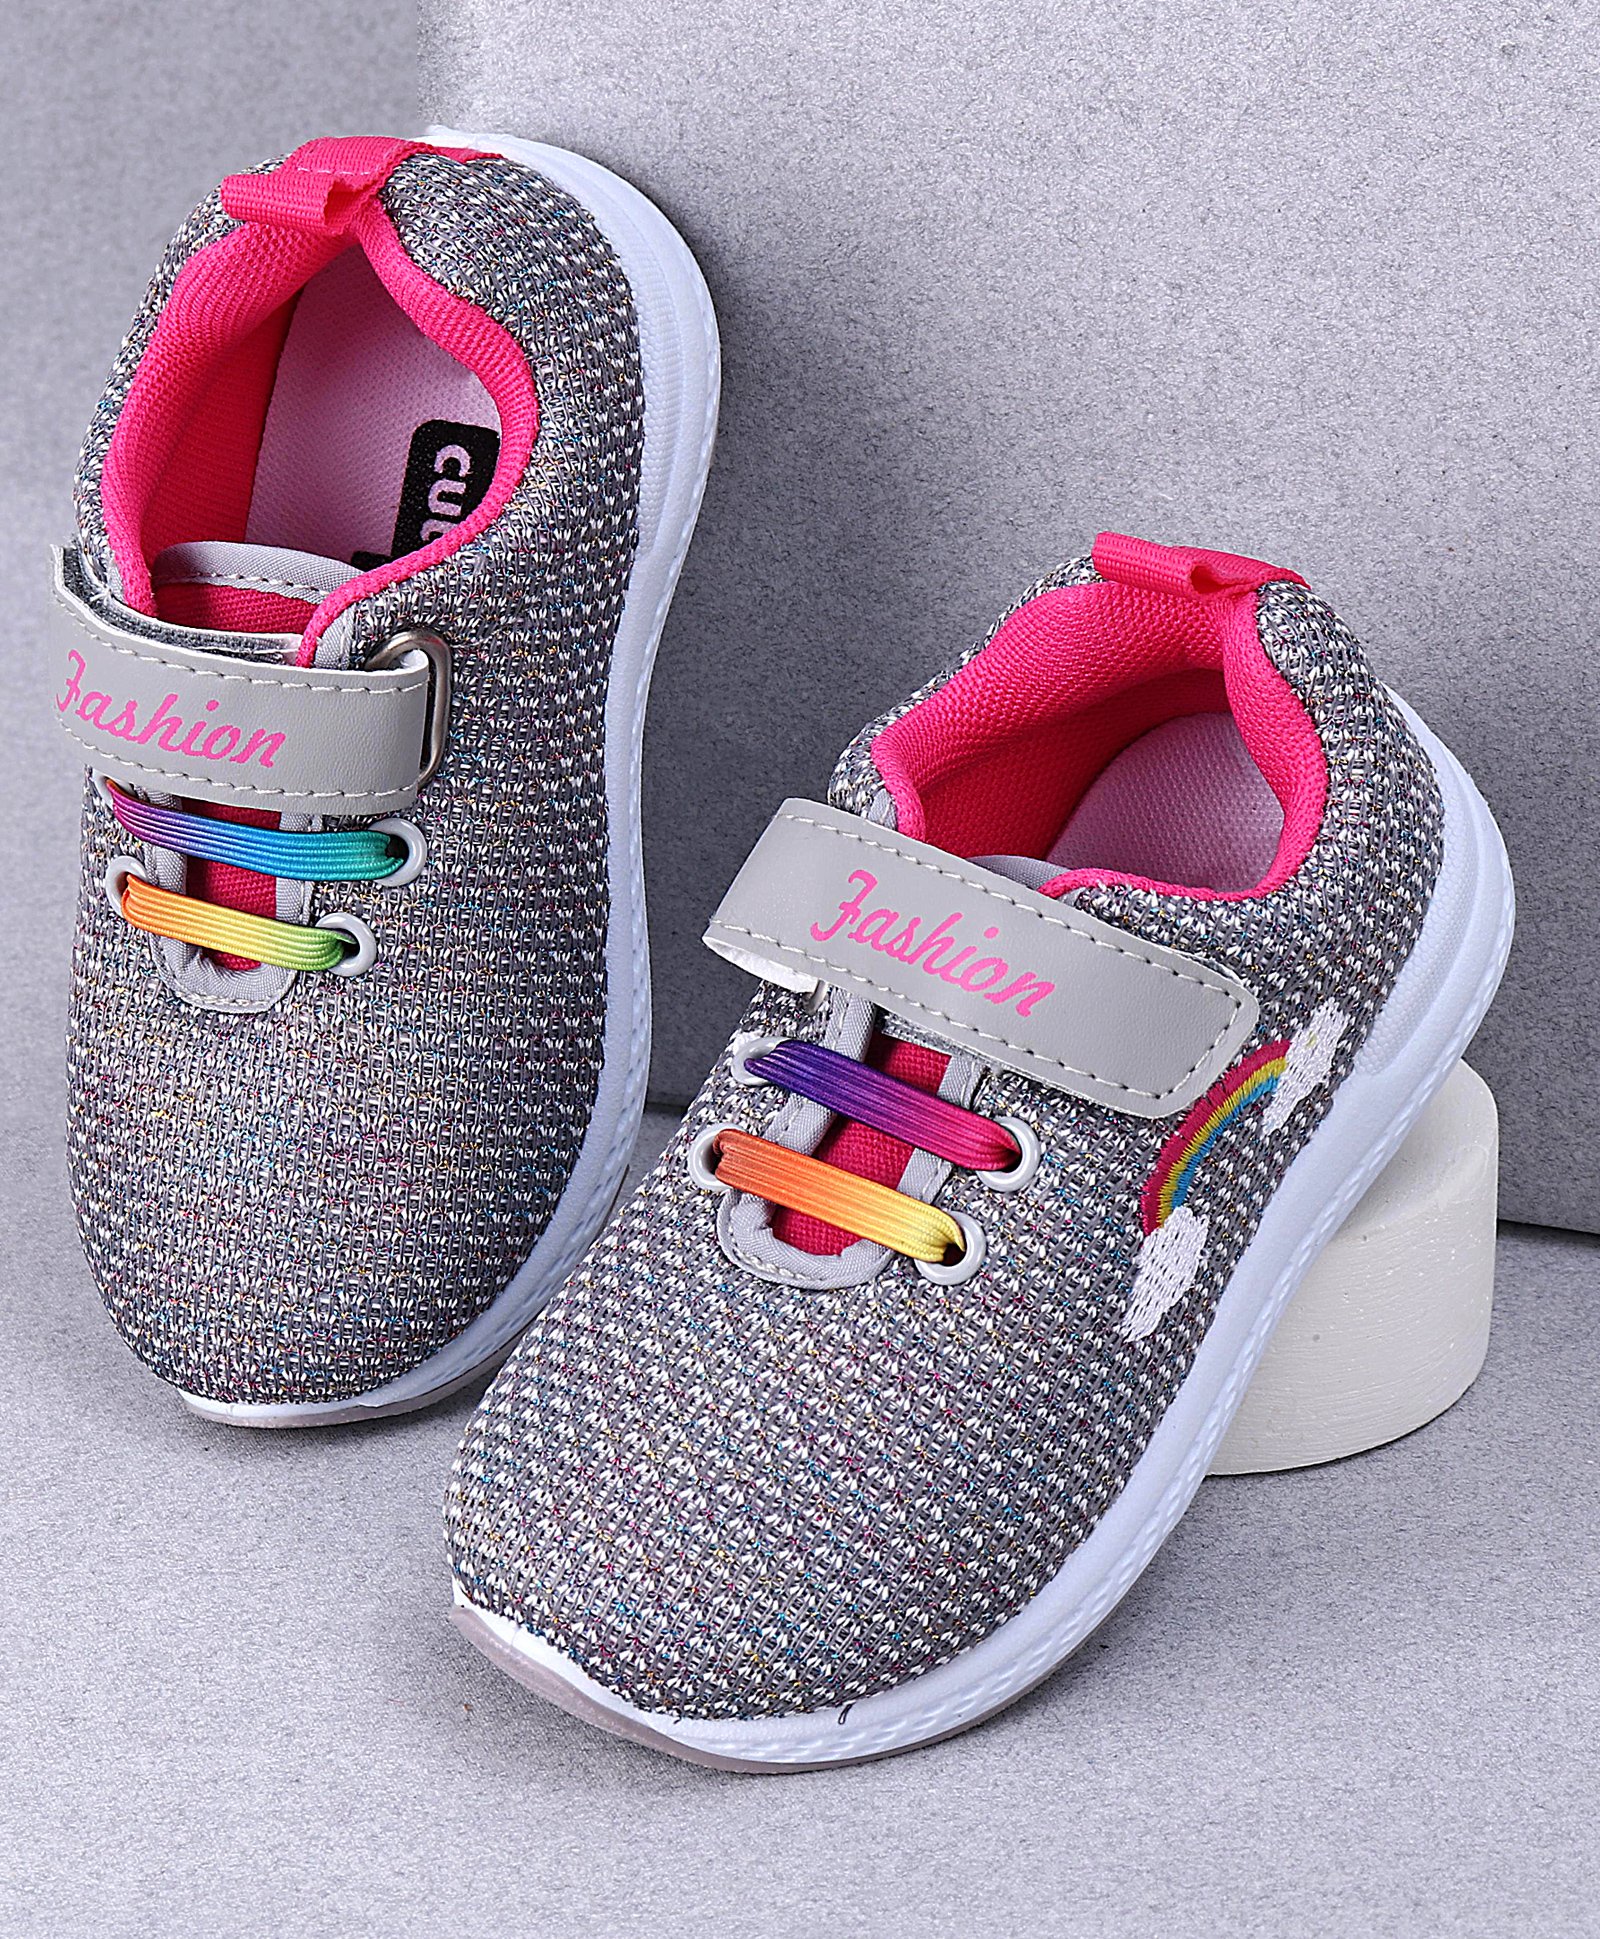 Buy Cute Walk by Babyhug Sports Shoes 